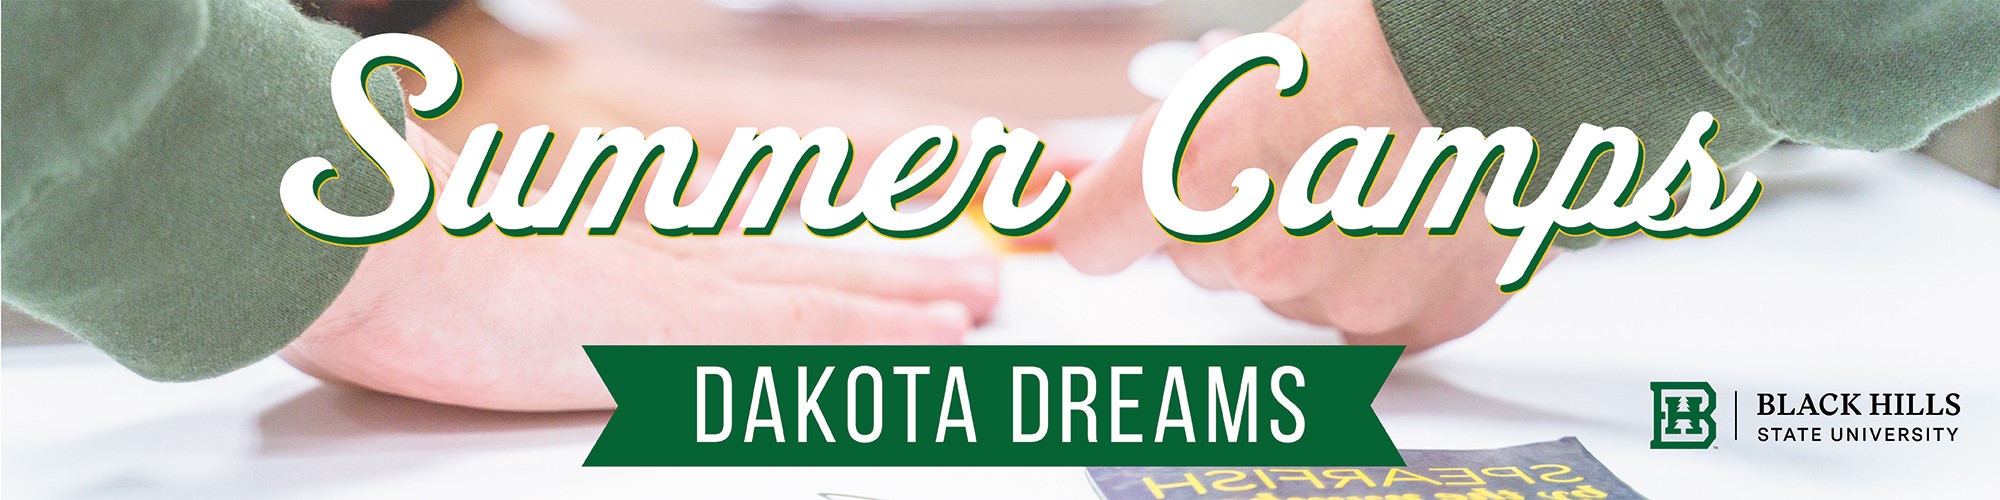 Dakota Dreams Banner